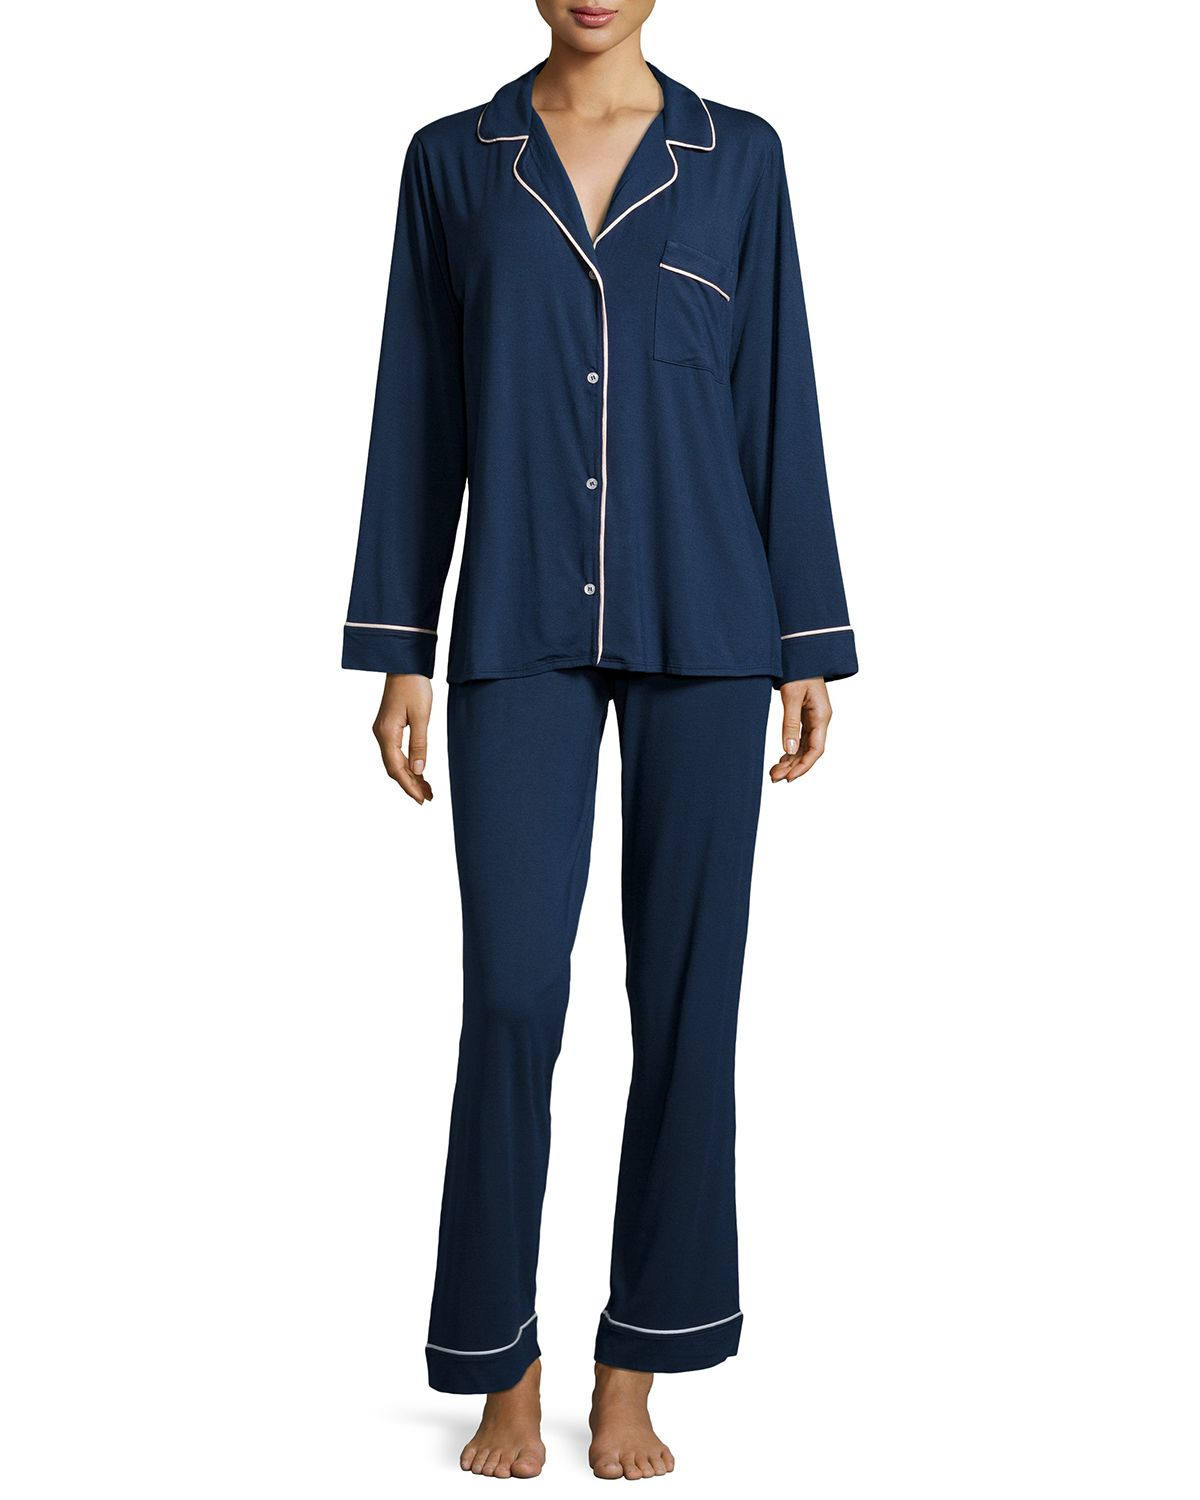 Lyst - Eberjey Gisele Long Pajama Set in Blue - Save 55%